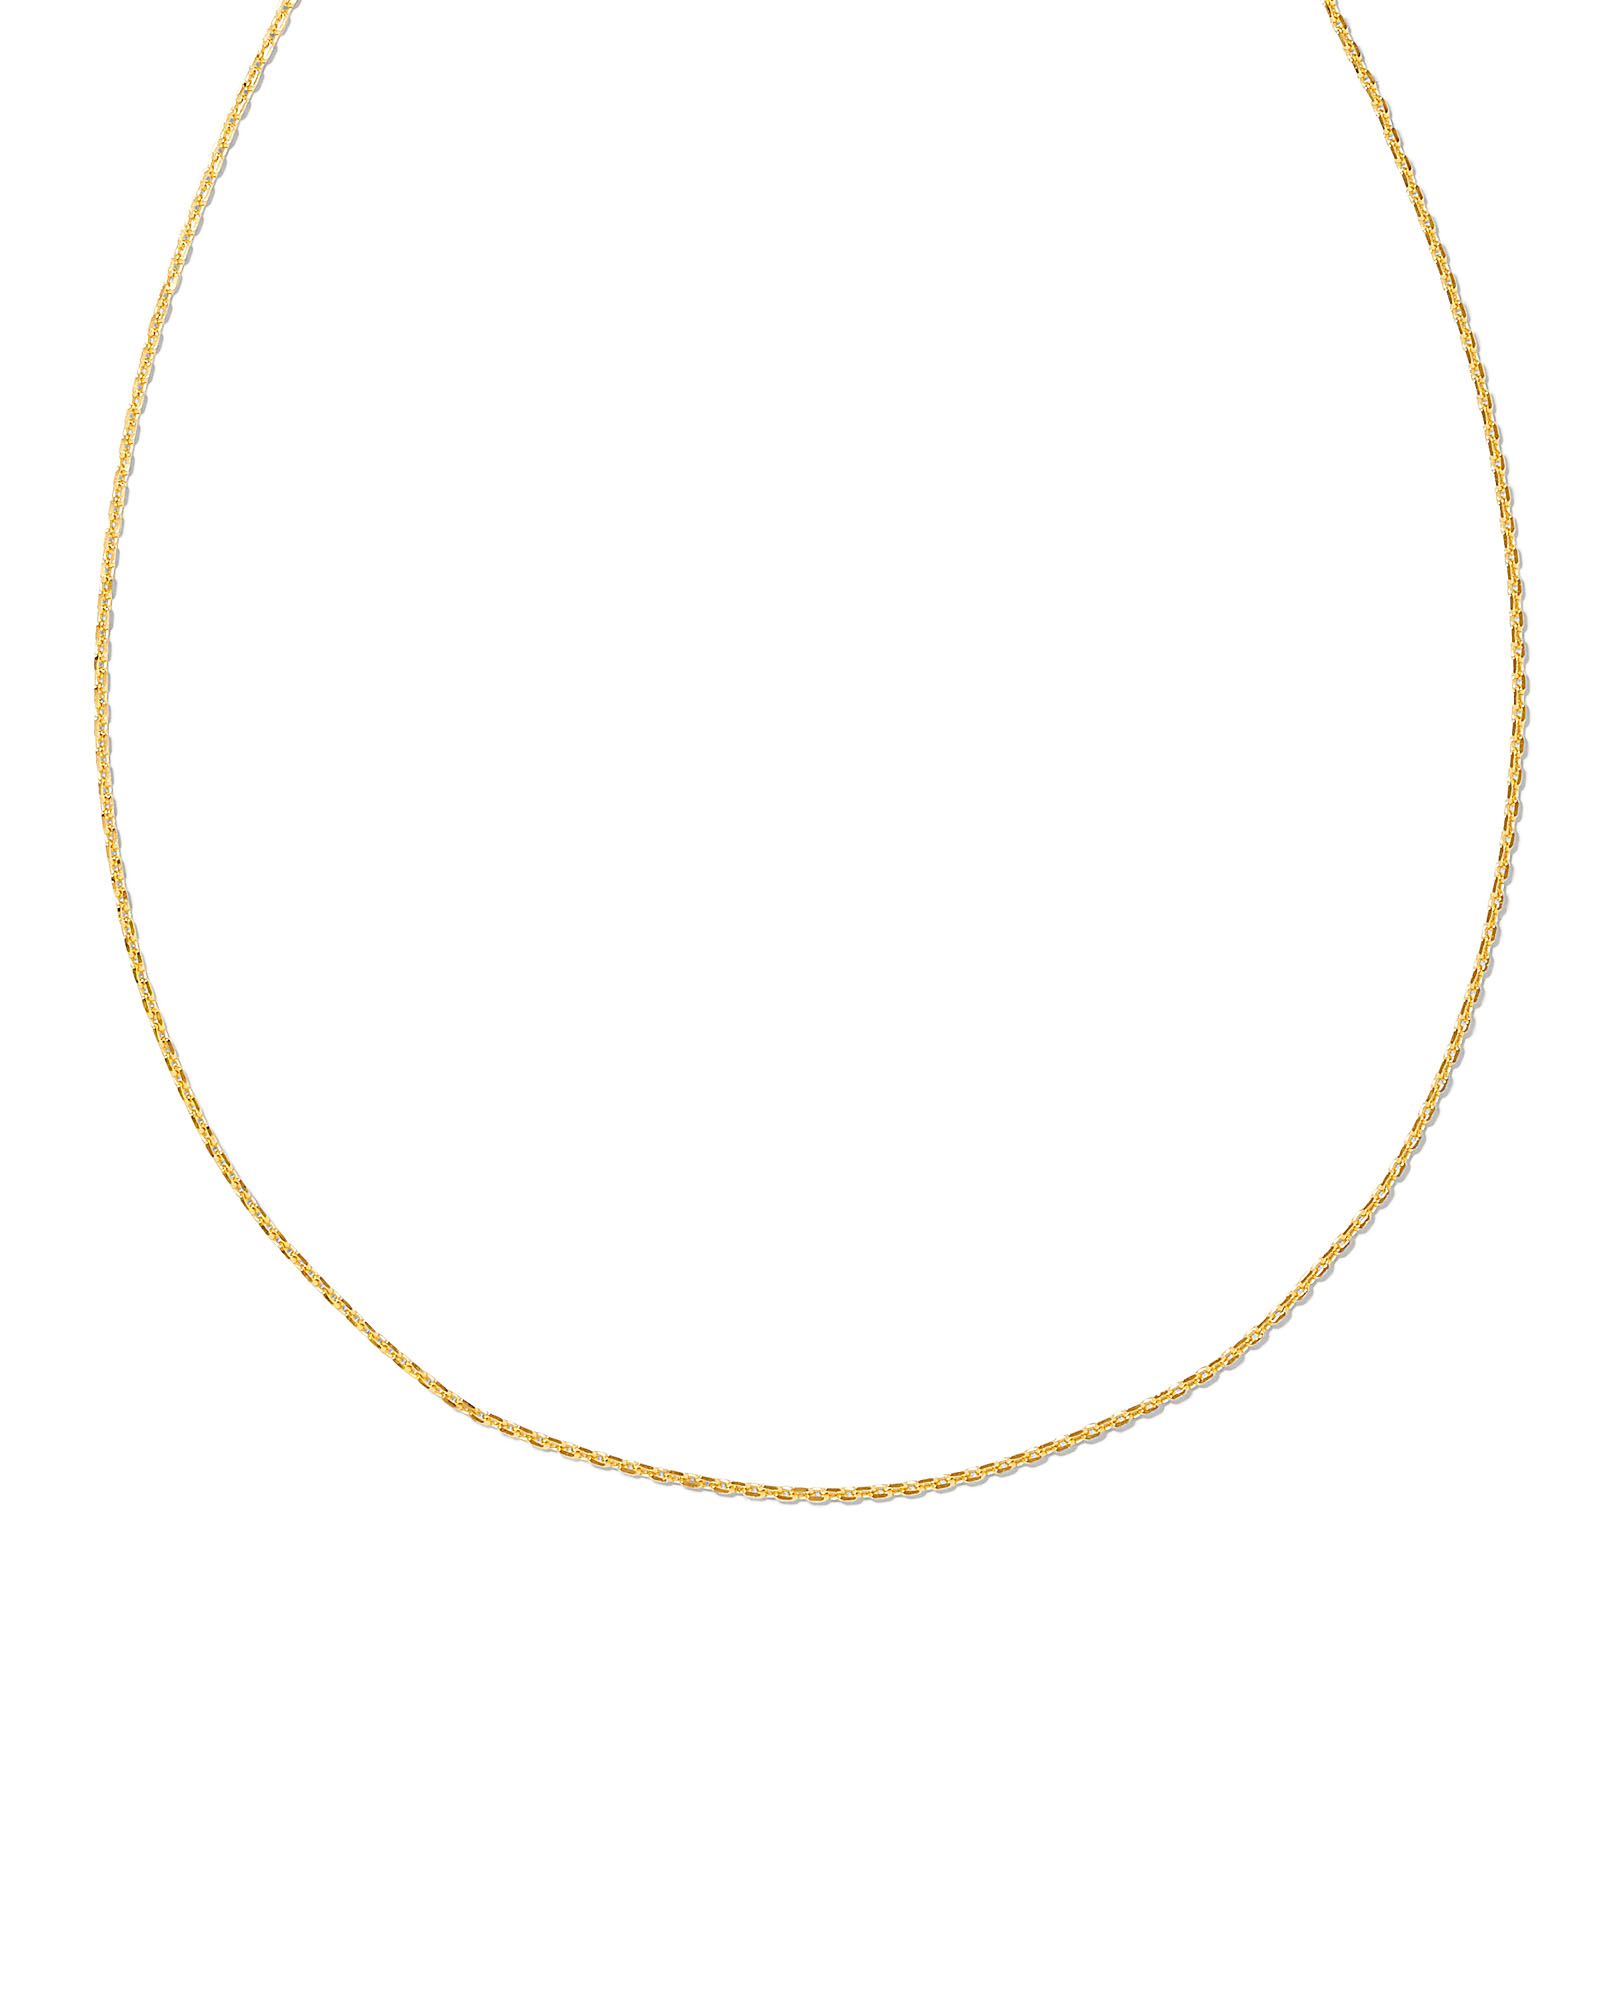 Kendra Scott Channing Multi Strand Necklace Rose Gold | eBay